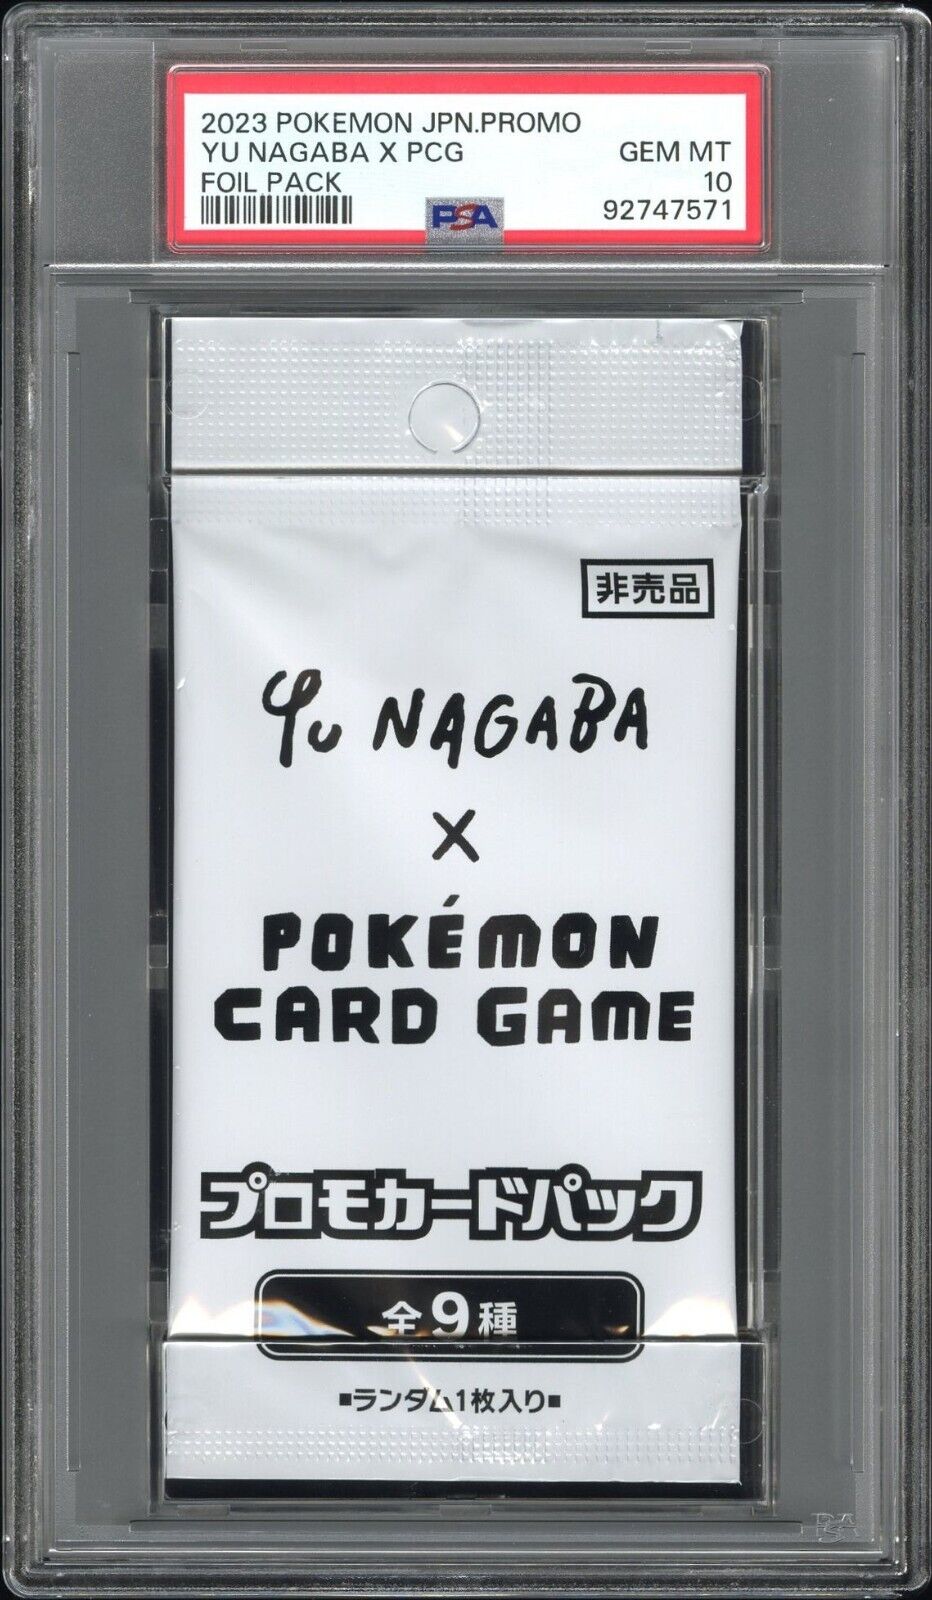 2023 Pokemon Japanese Promo YU NAGABA x PCG Booster Pack GEM MINT PSA 10